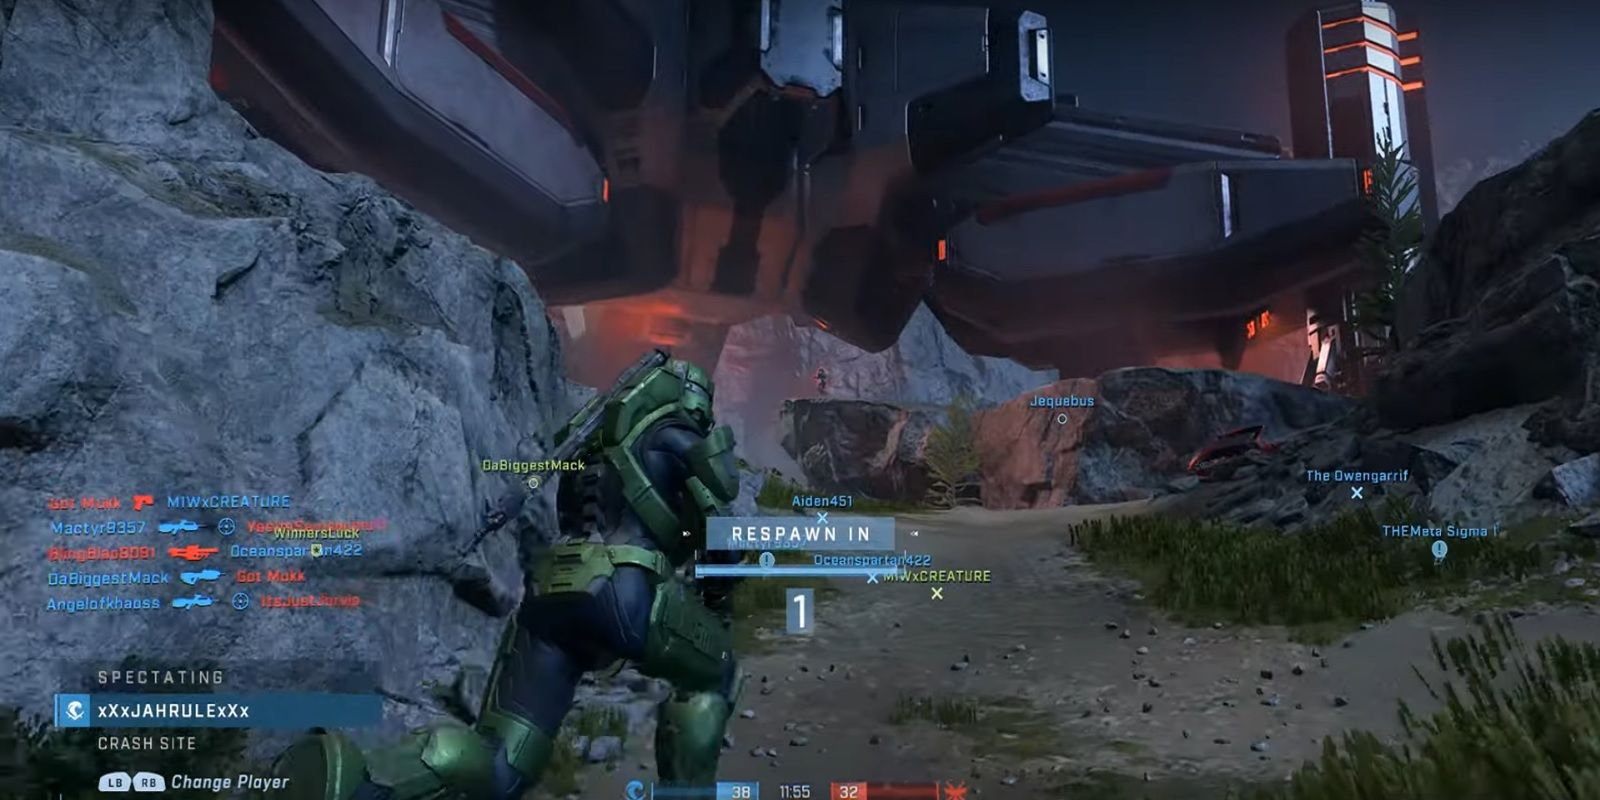 Halo Infinite Deadlock respawn screen